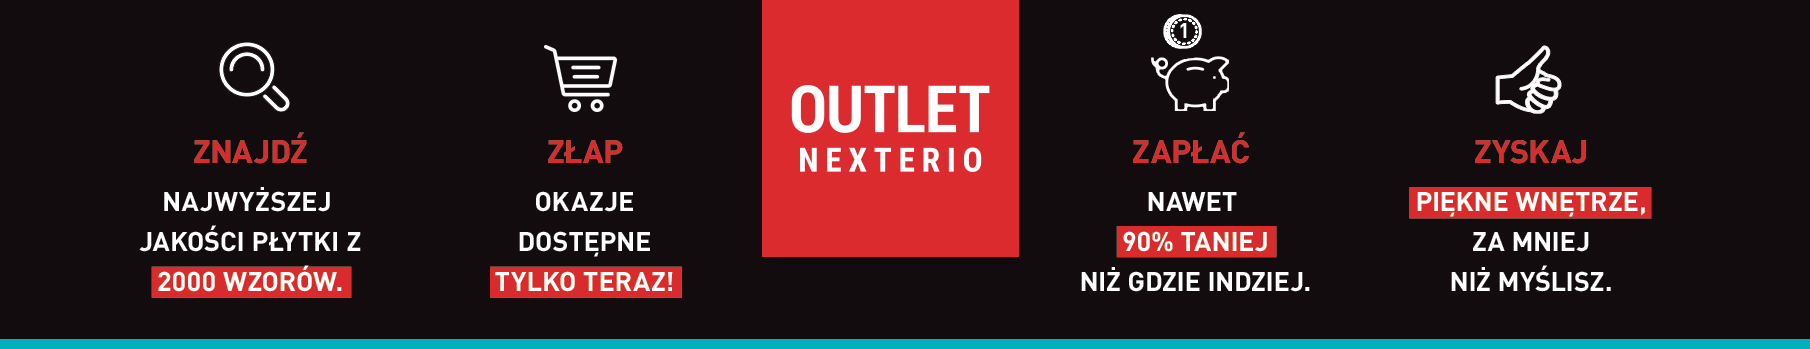 Outlet Nexterio Gdynia